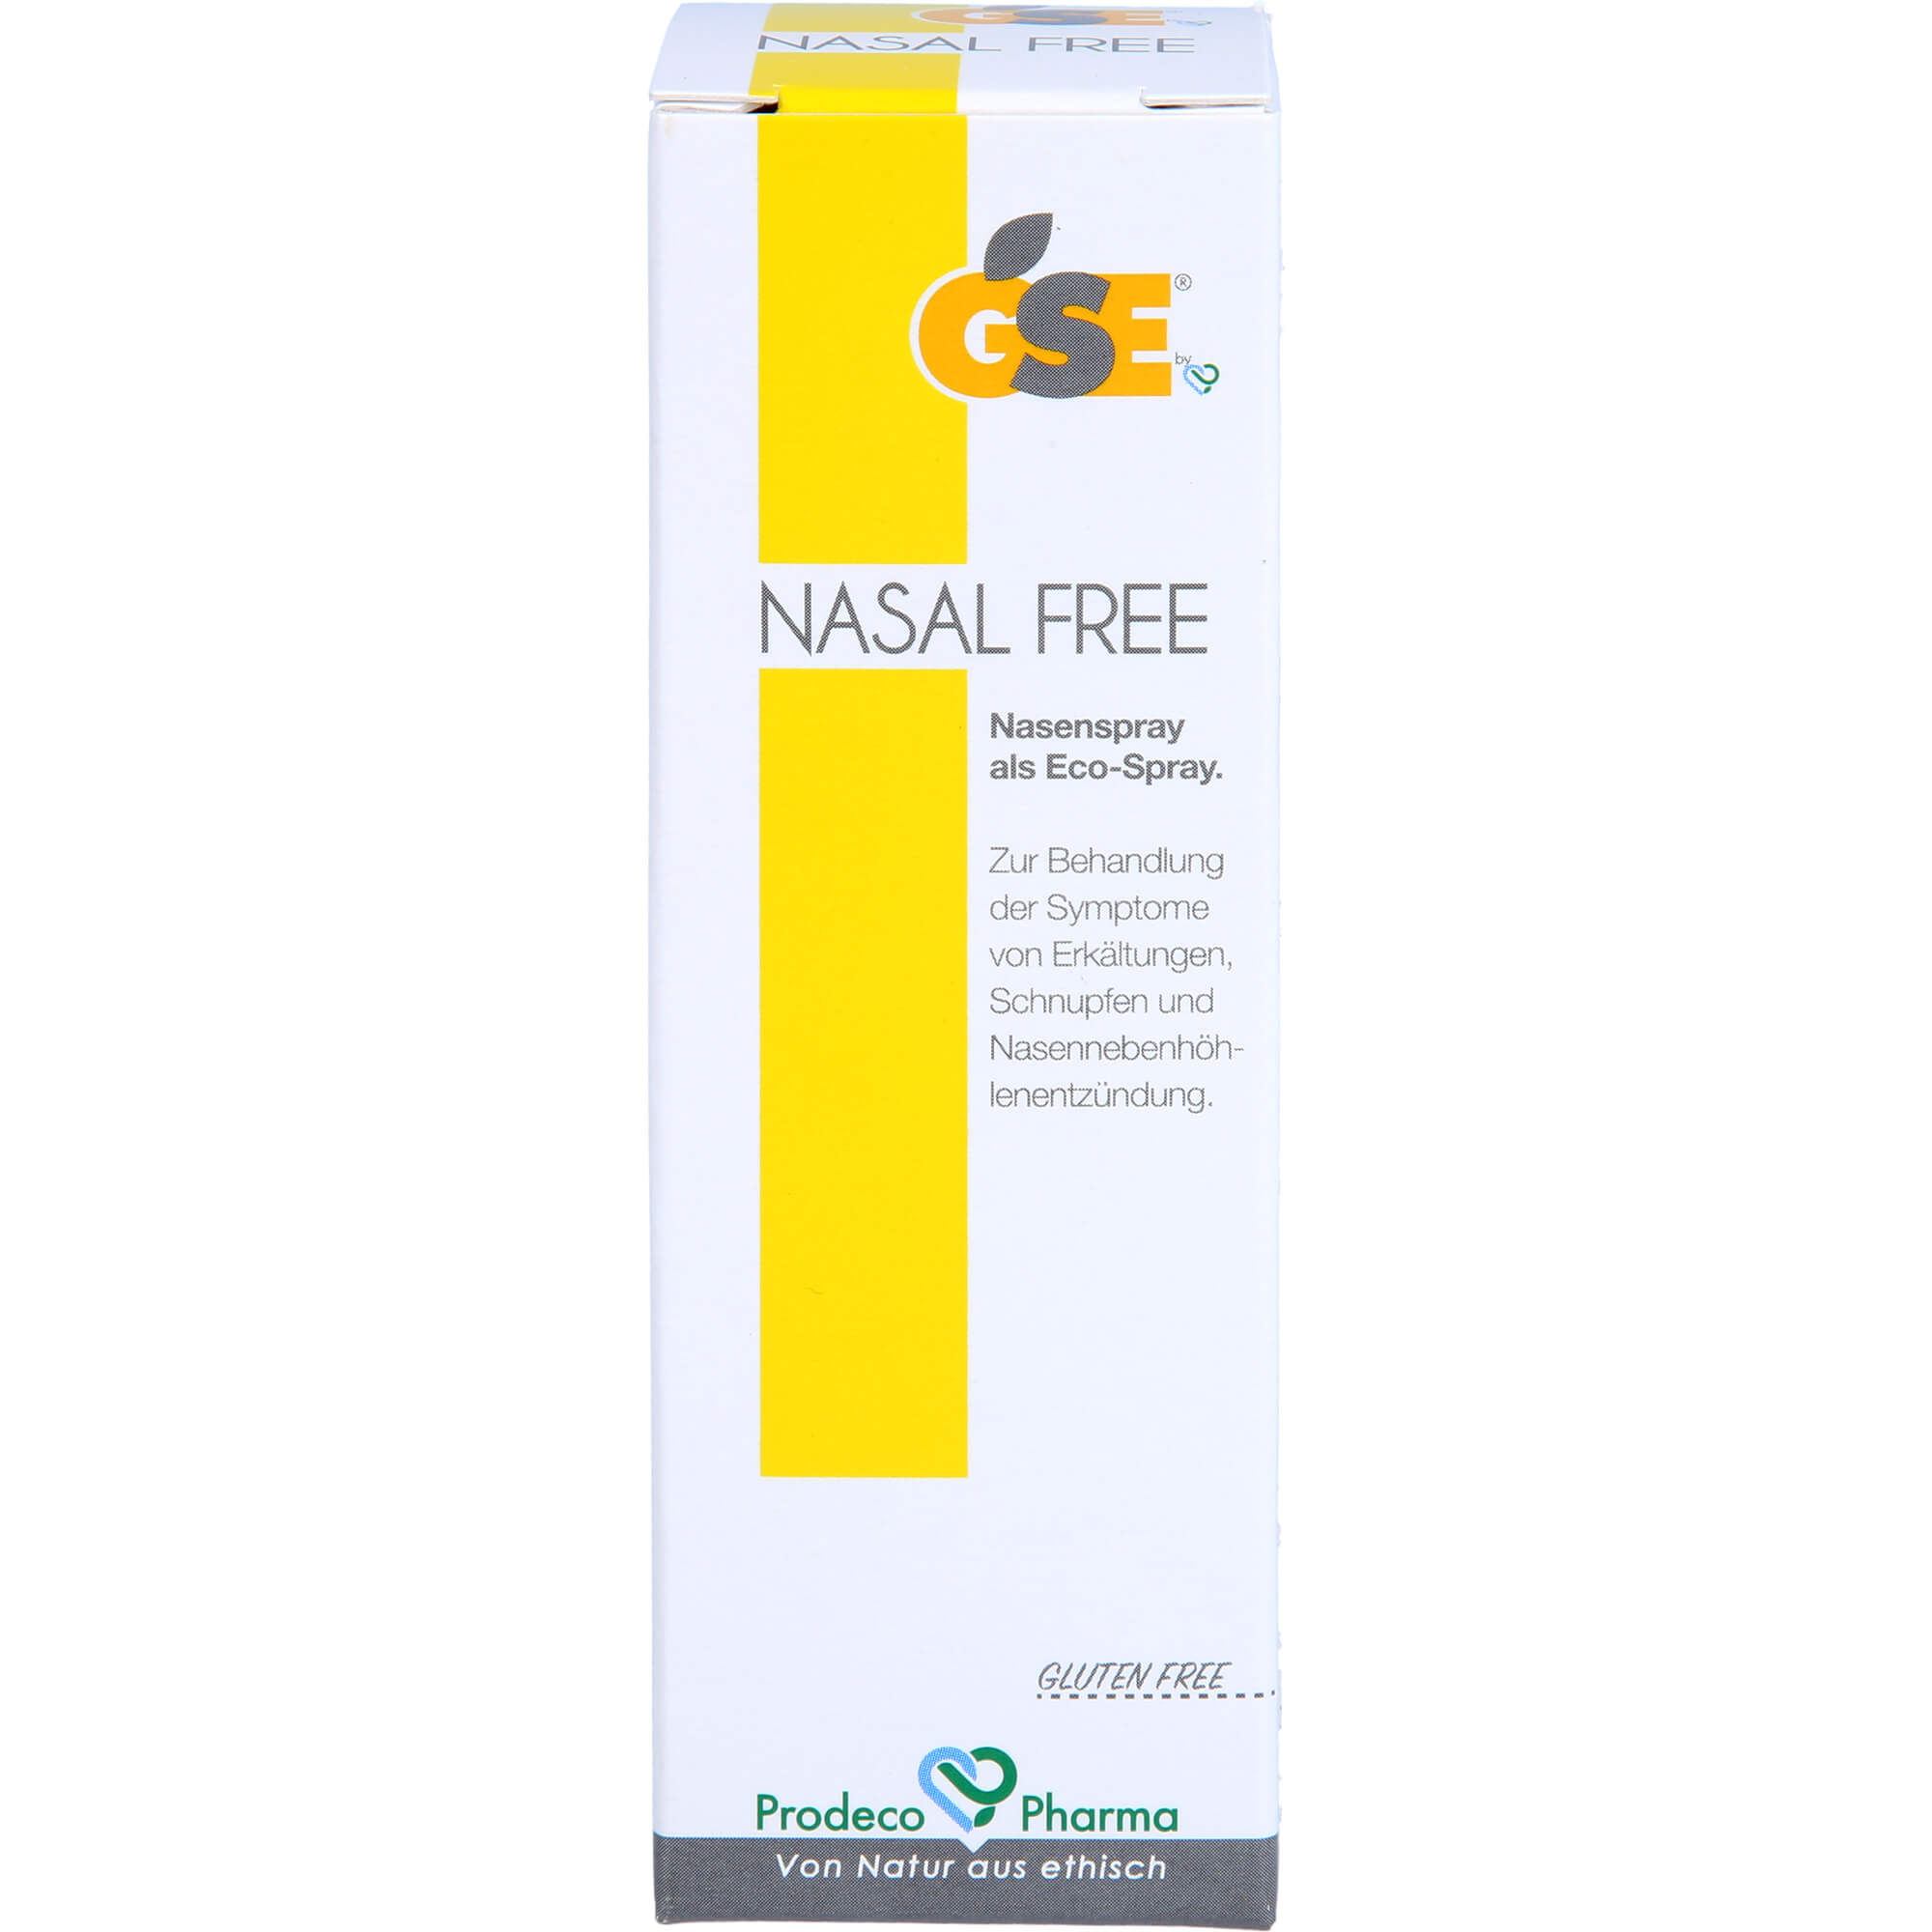 GSE Nasal Free Nasenspray